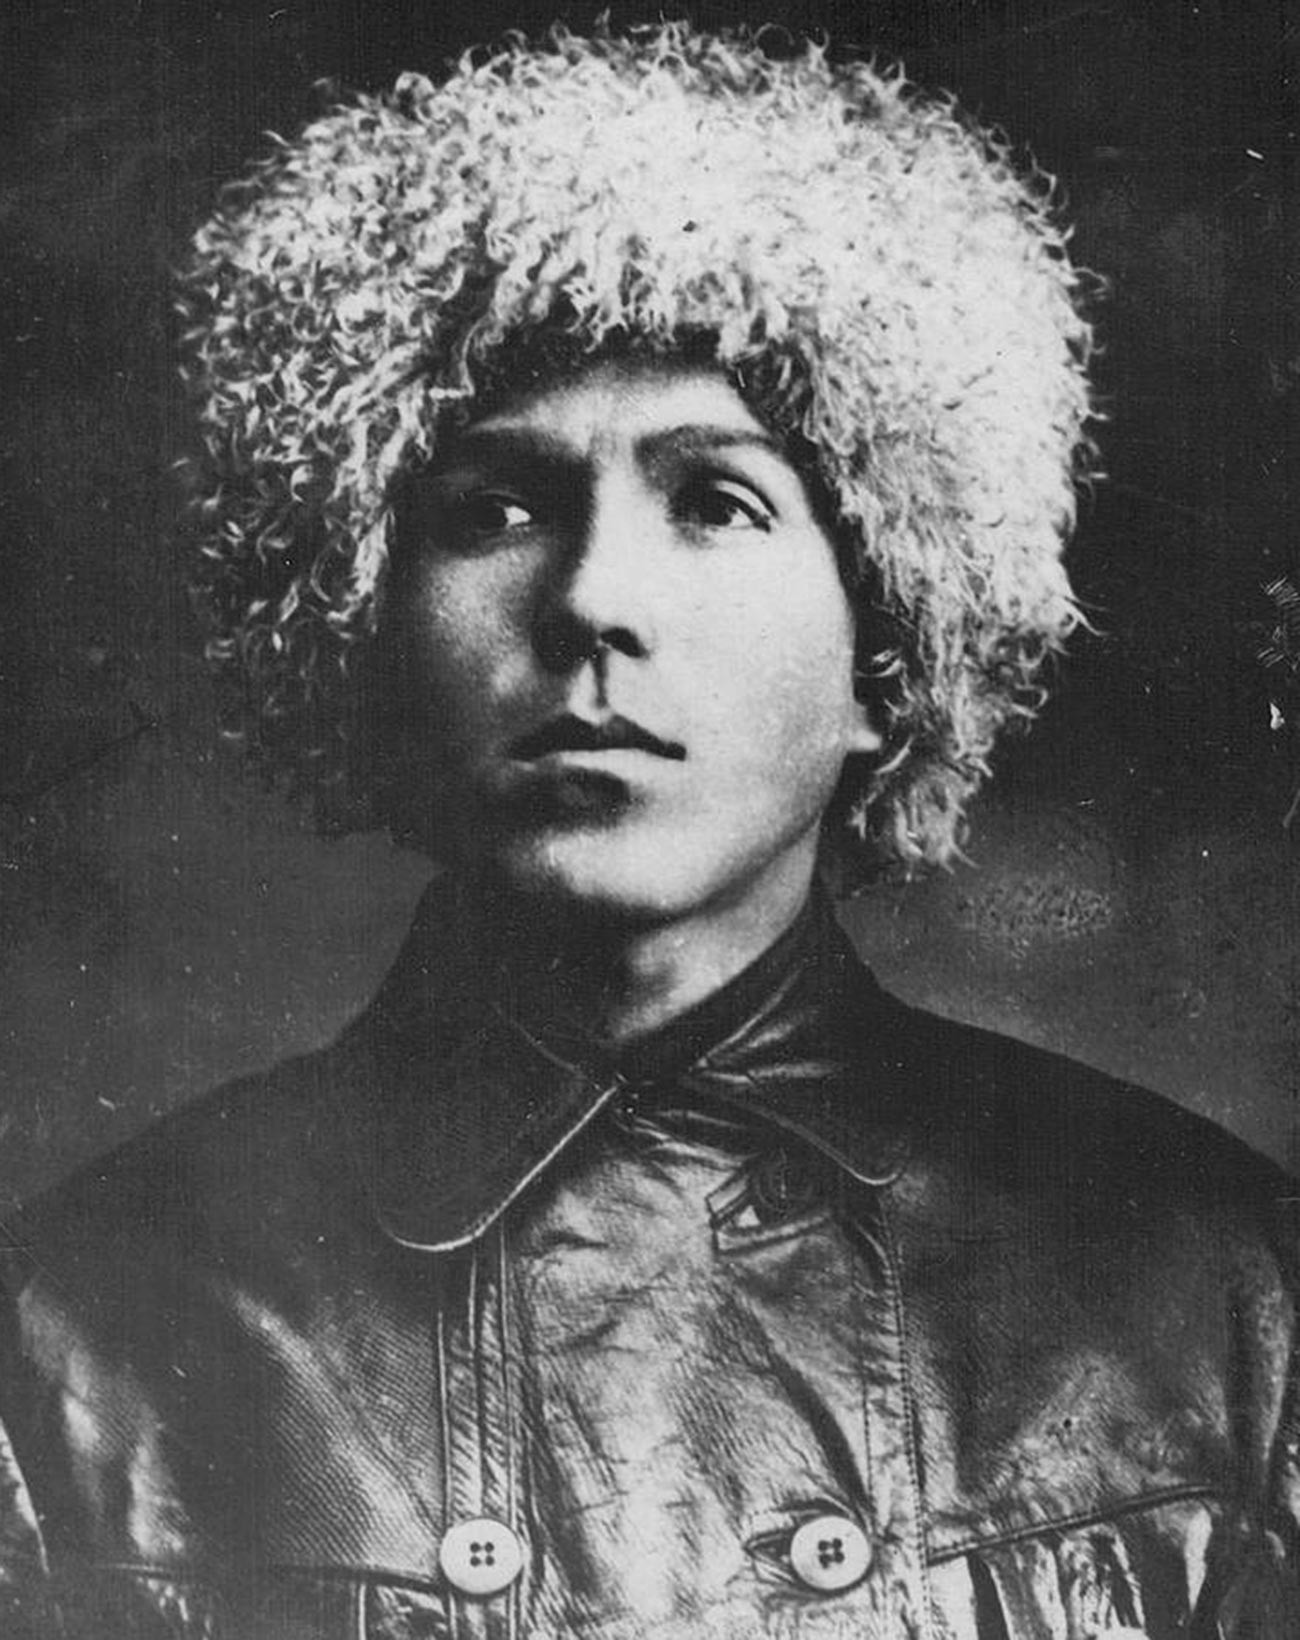 Photo of Nikolai Kuznetsov taken in 1930.